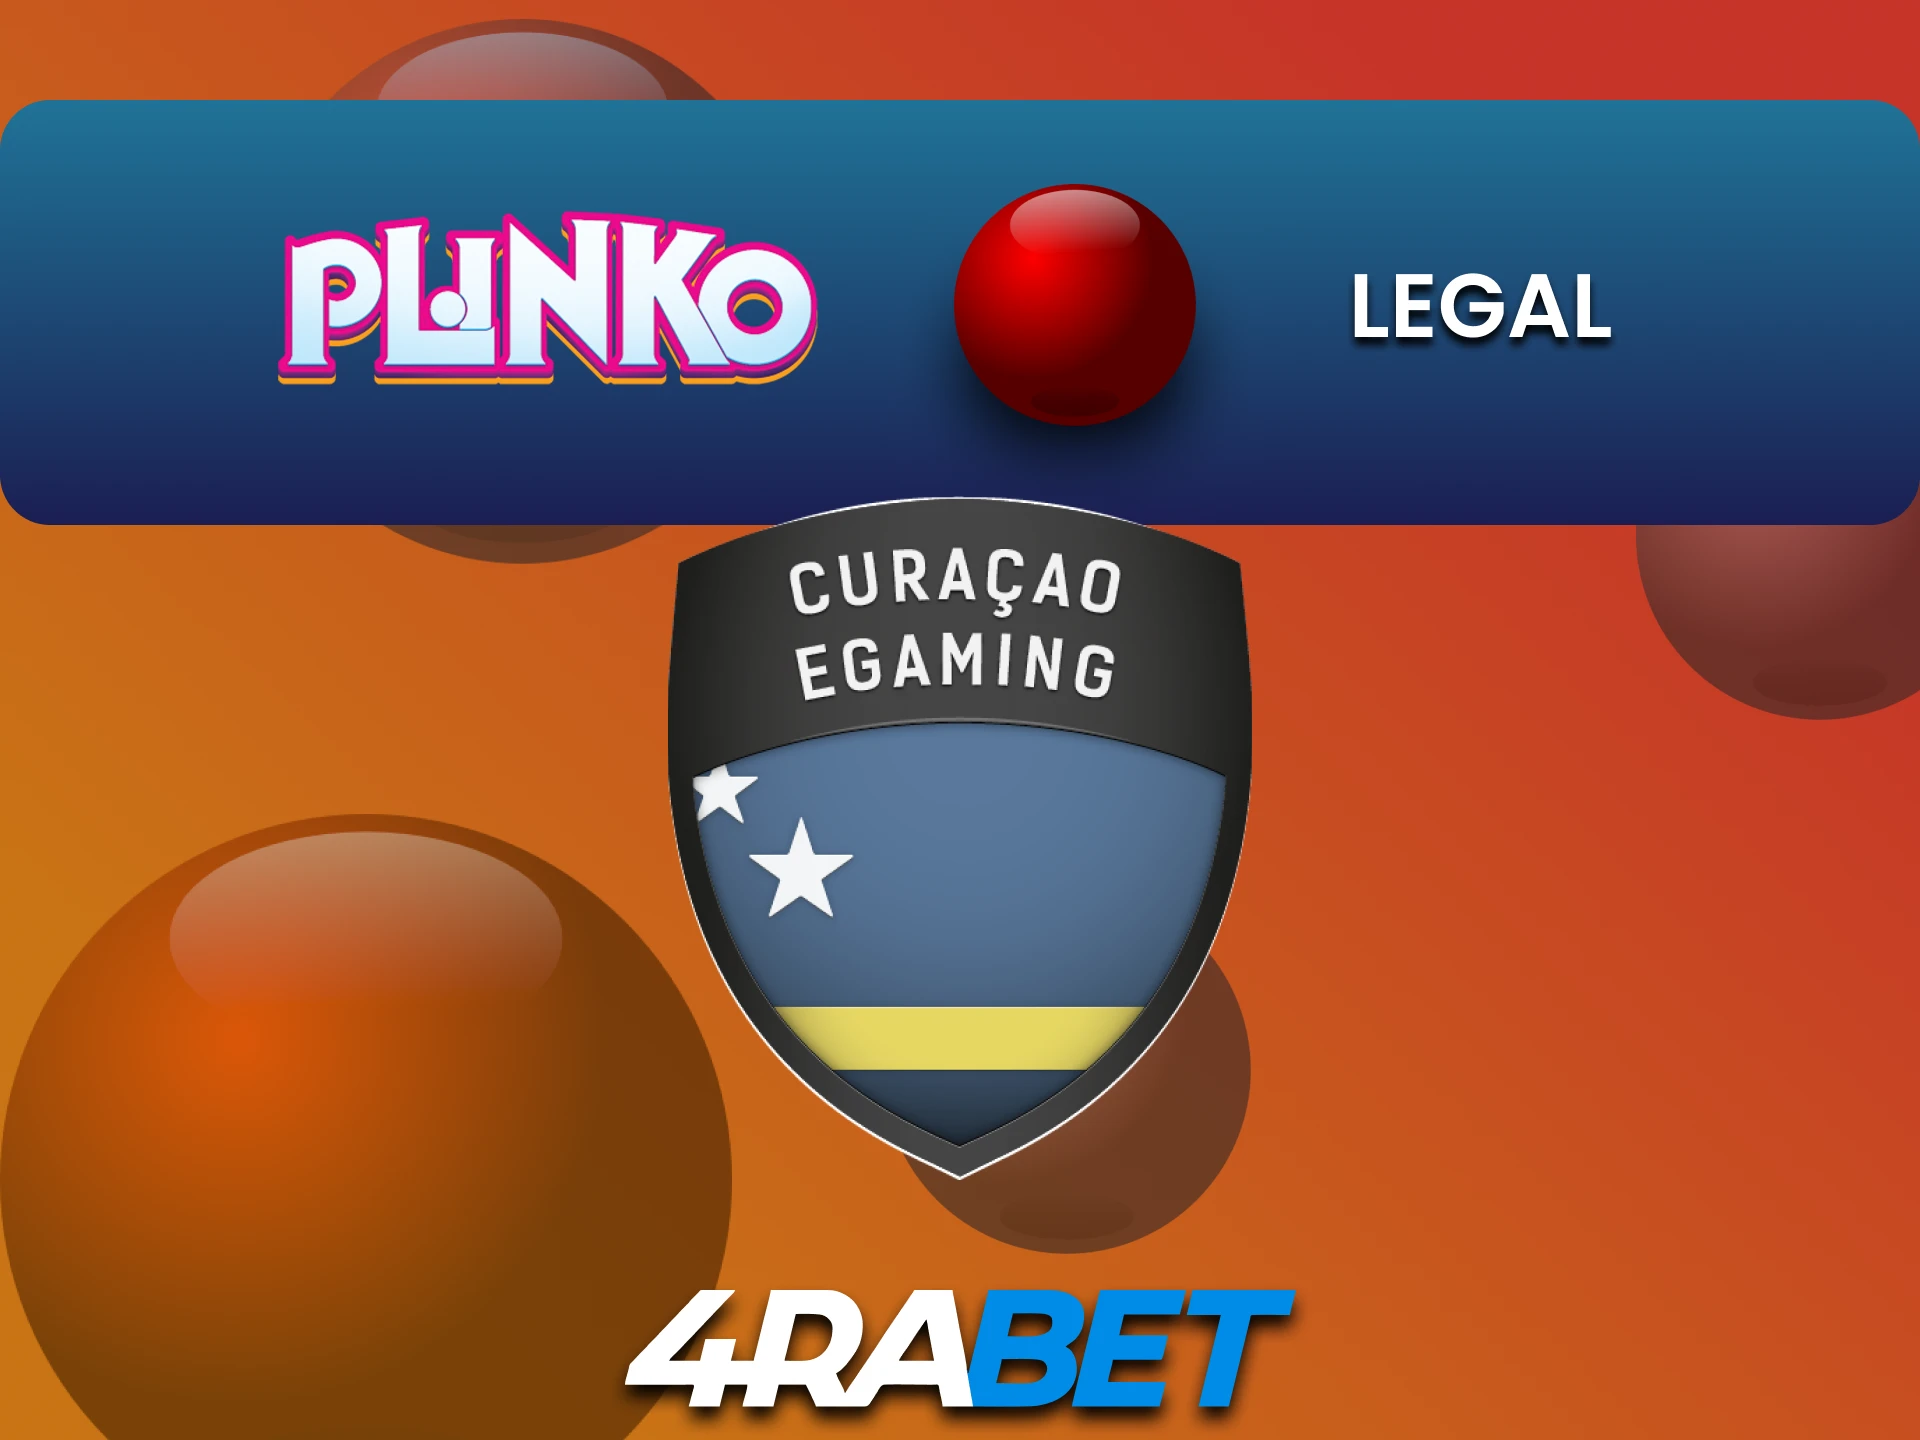 4rabet is legal to play Plinko.